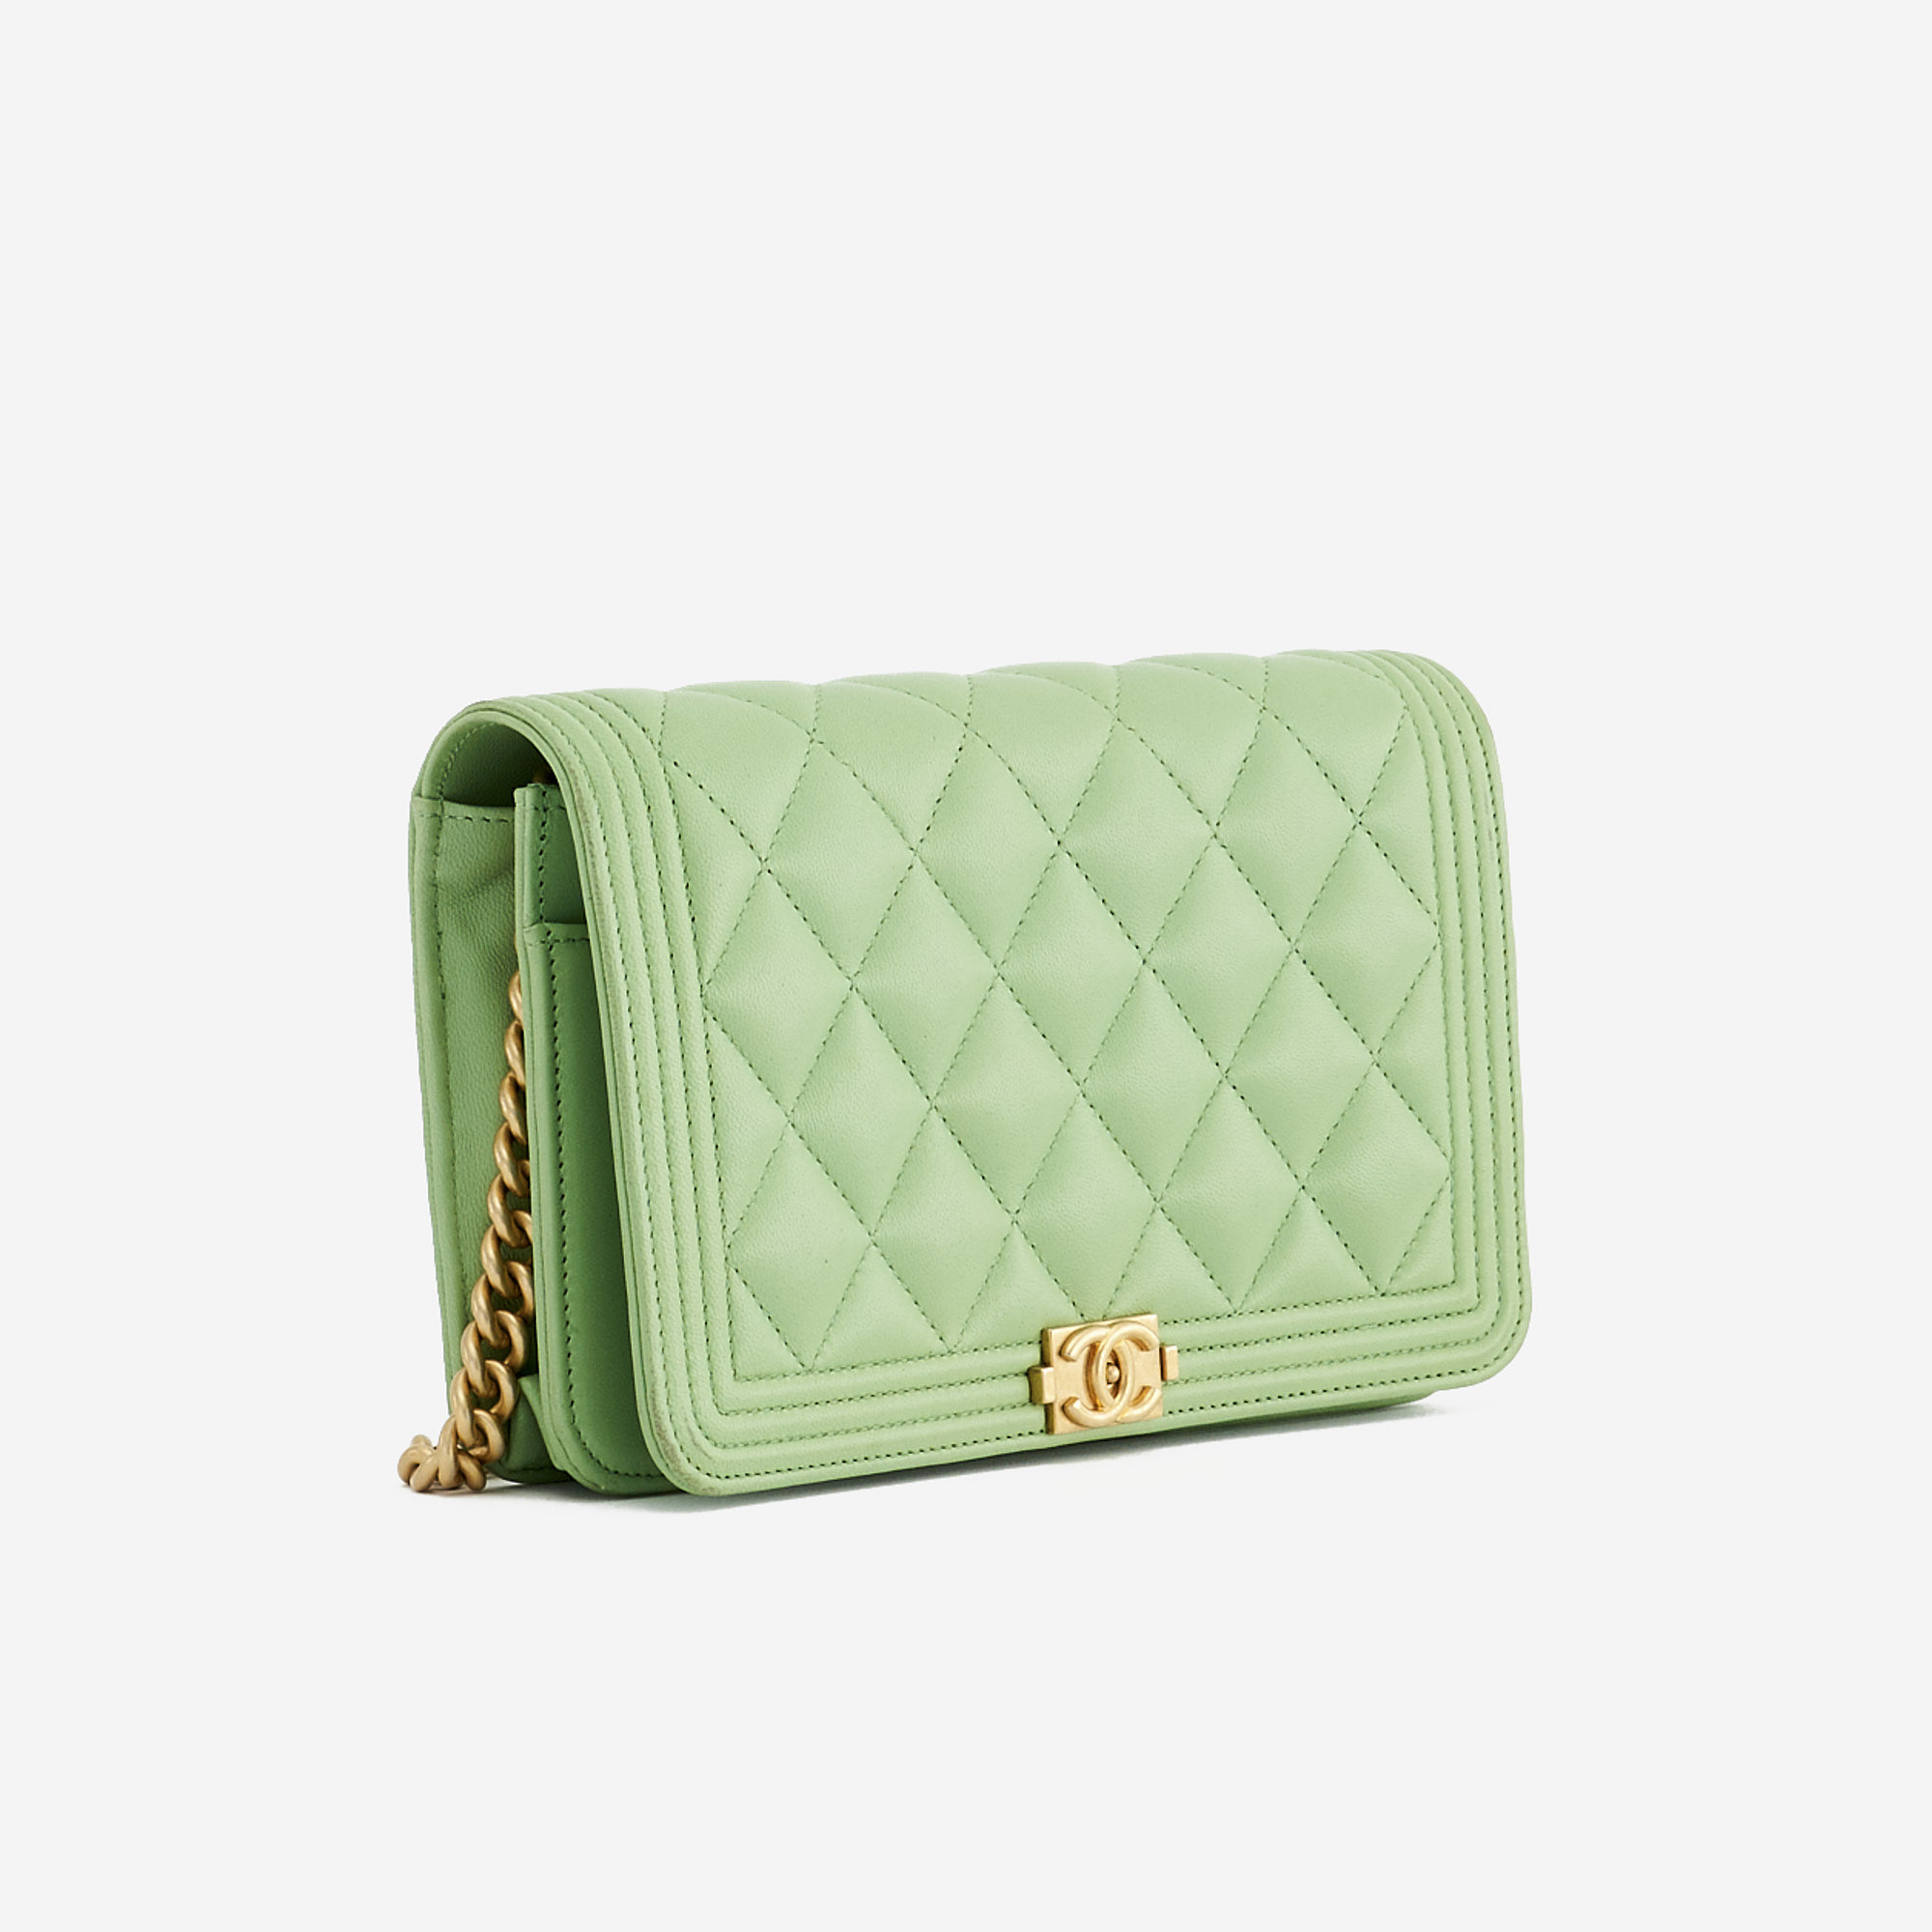 Bag Organizer for Chanel Woc (Wallet on Chain) - Seafoam Green